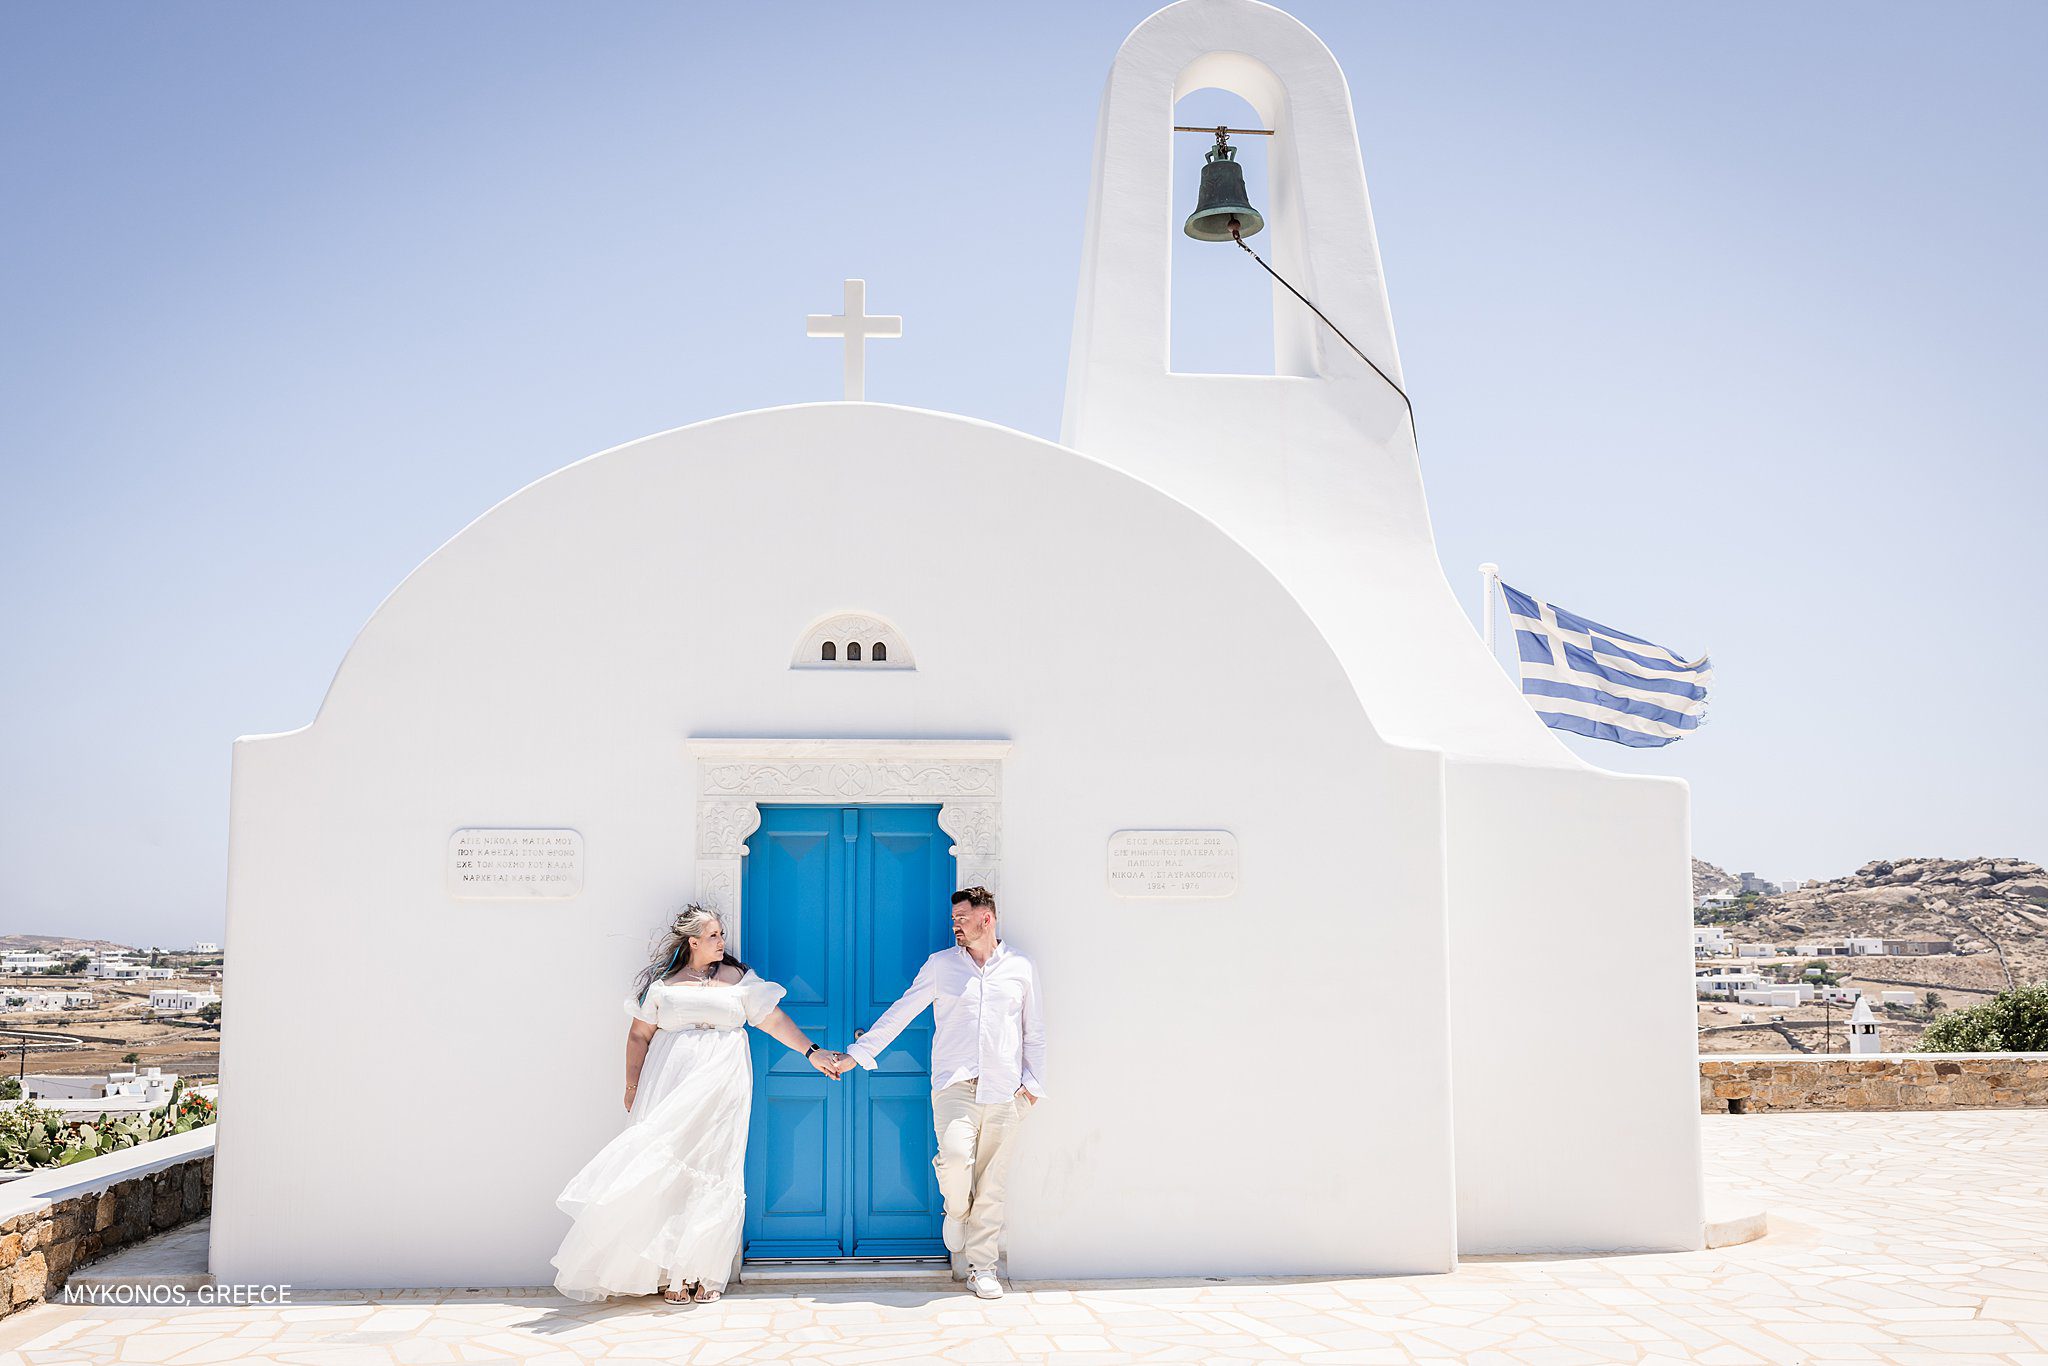 Top 10 Scenic Destination Elopement Locations in Europe - Santorini and Mykonos in Greece